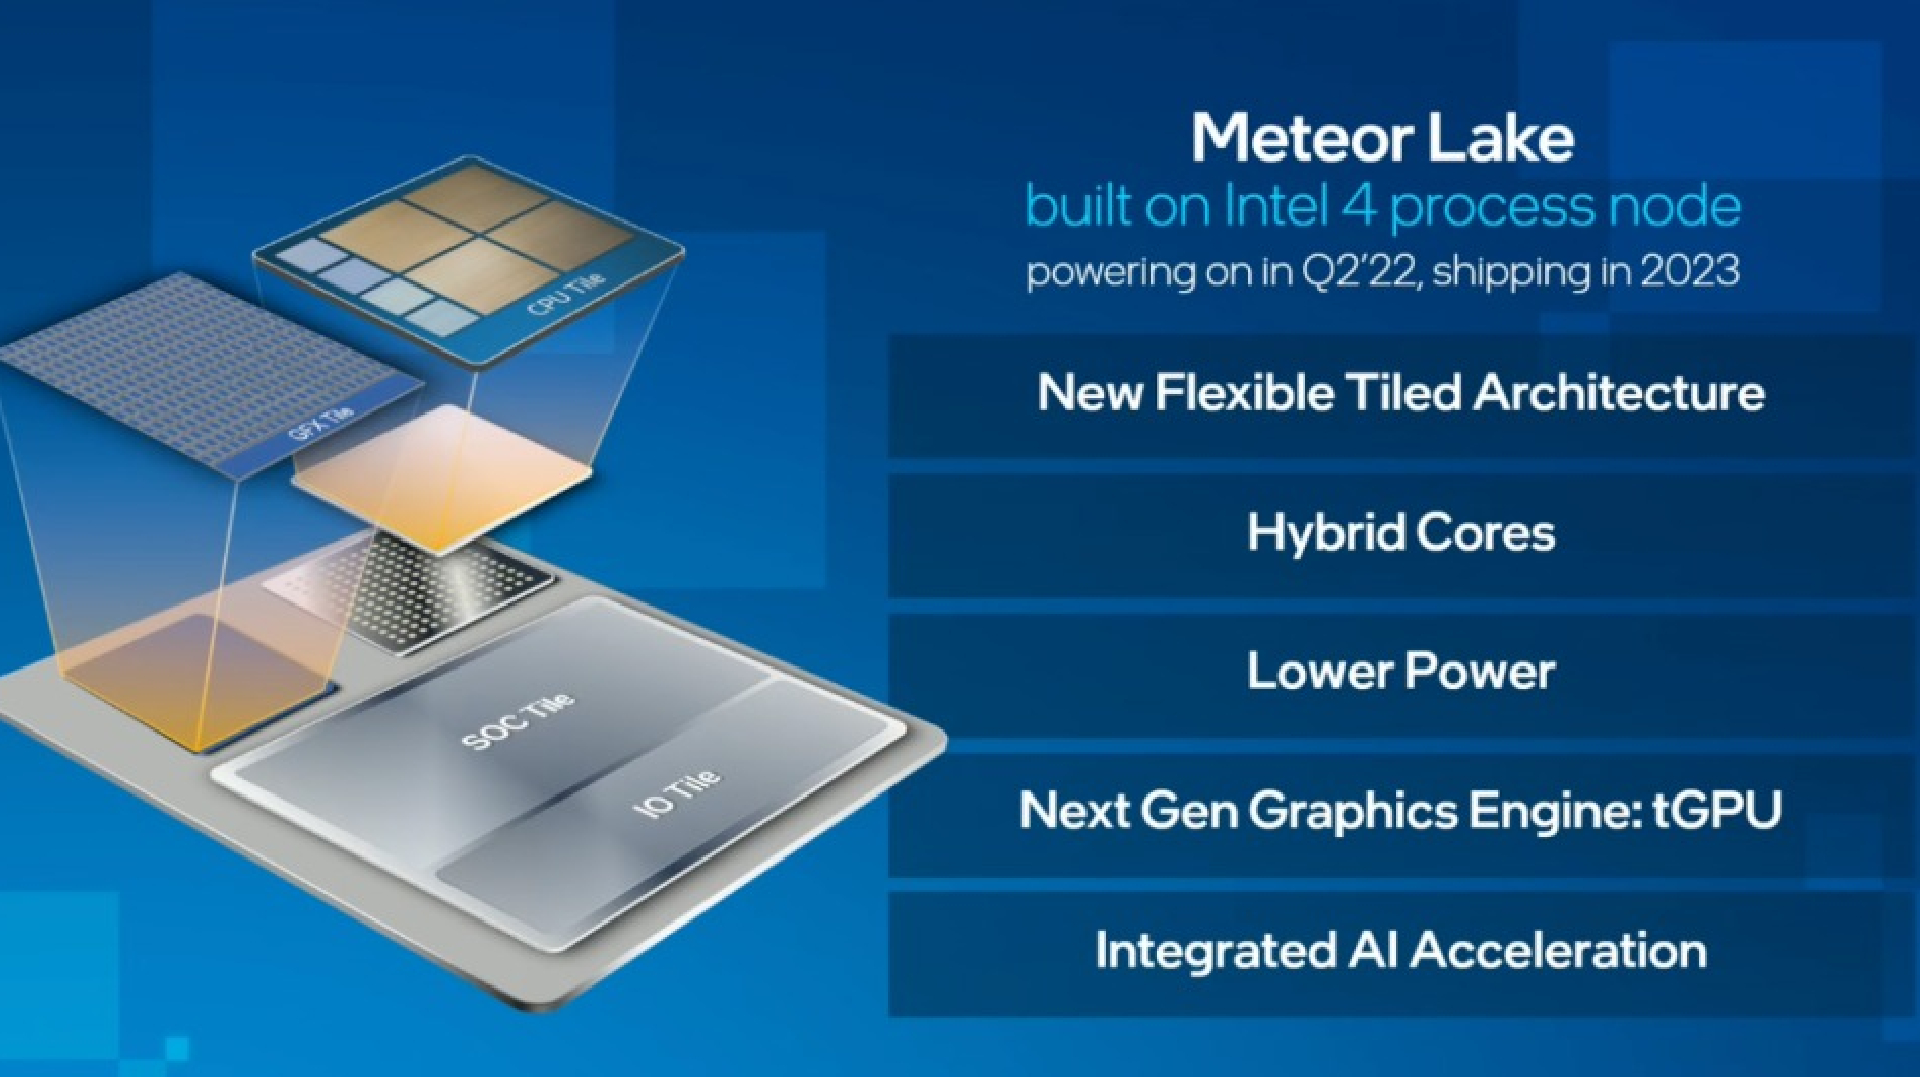 Intel Meteor Lake CPU presentation slide with details and diagram